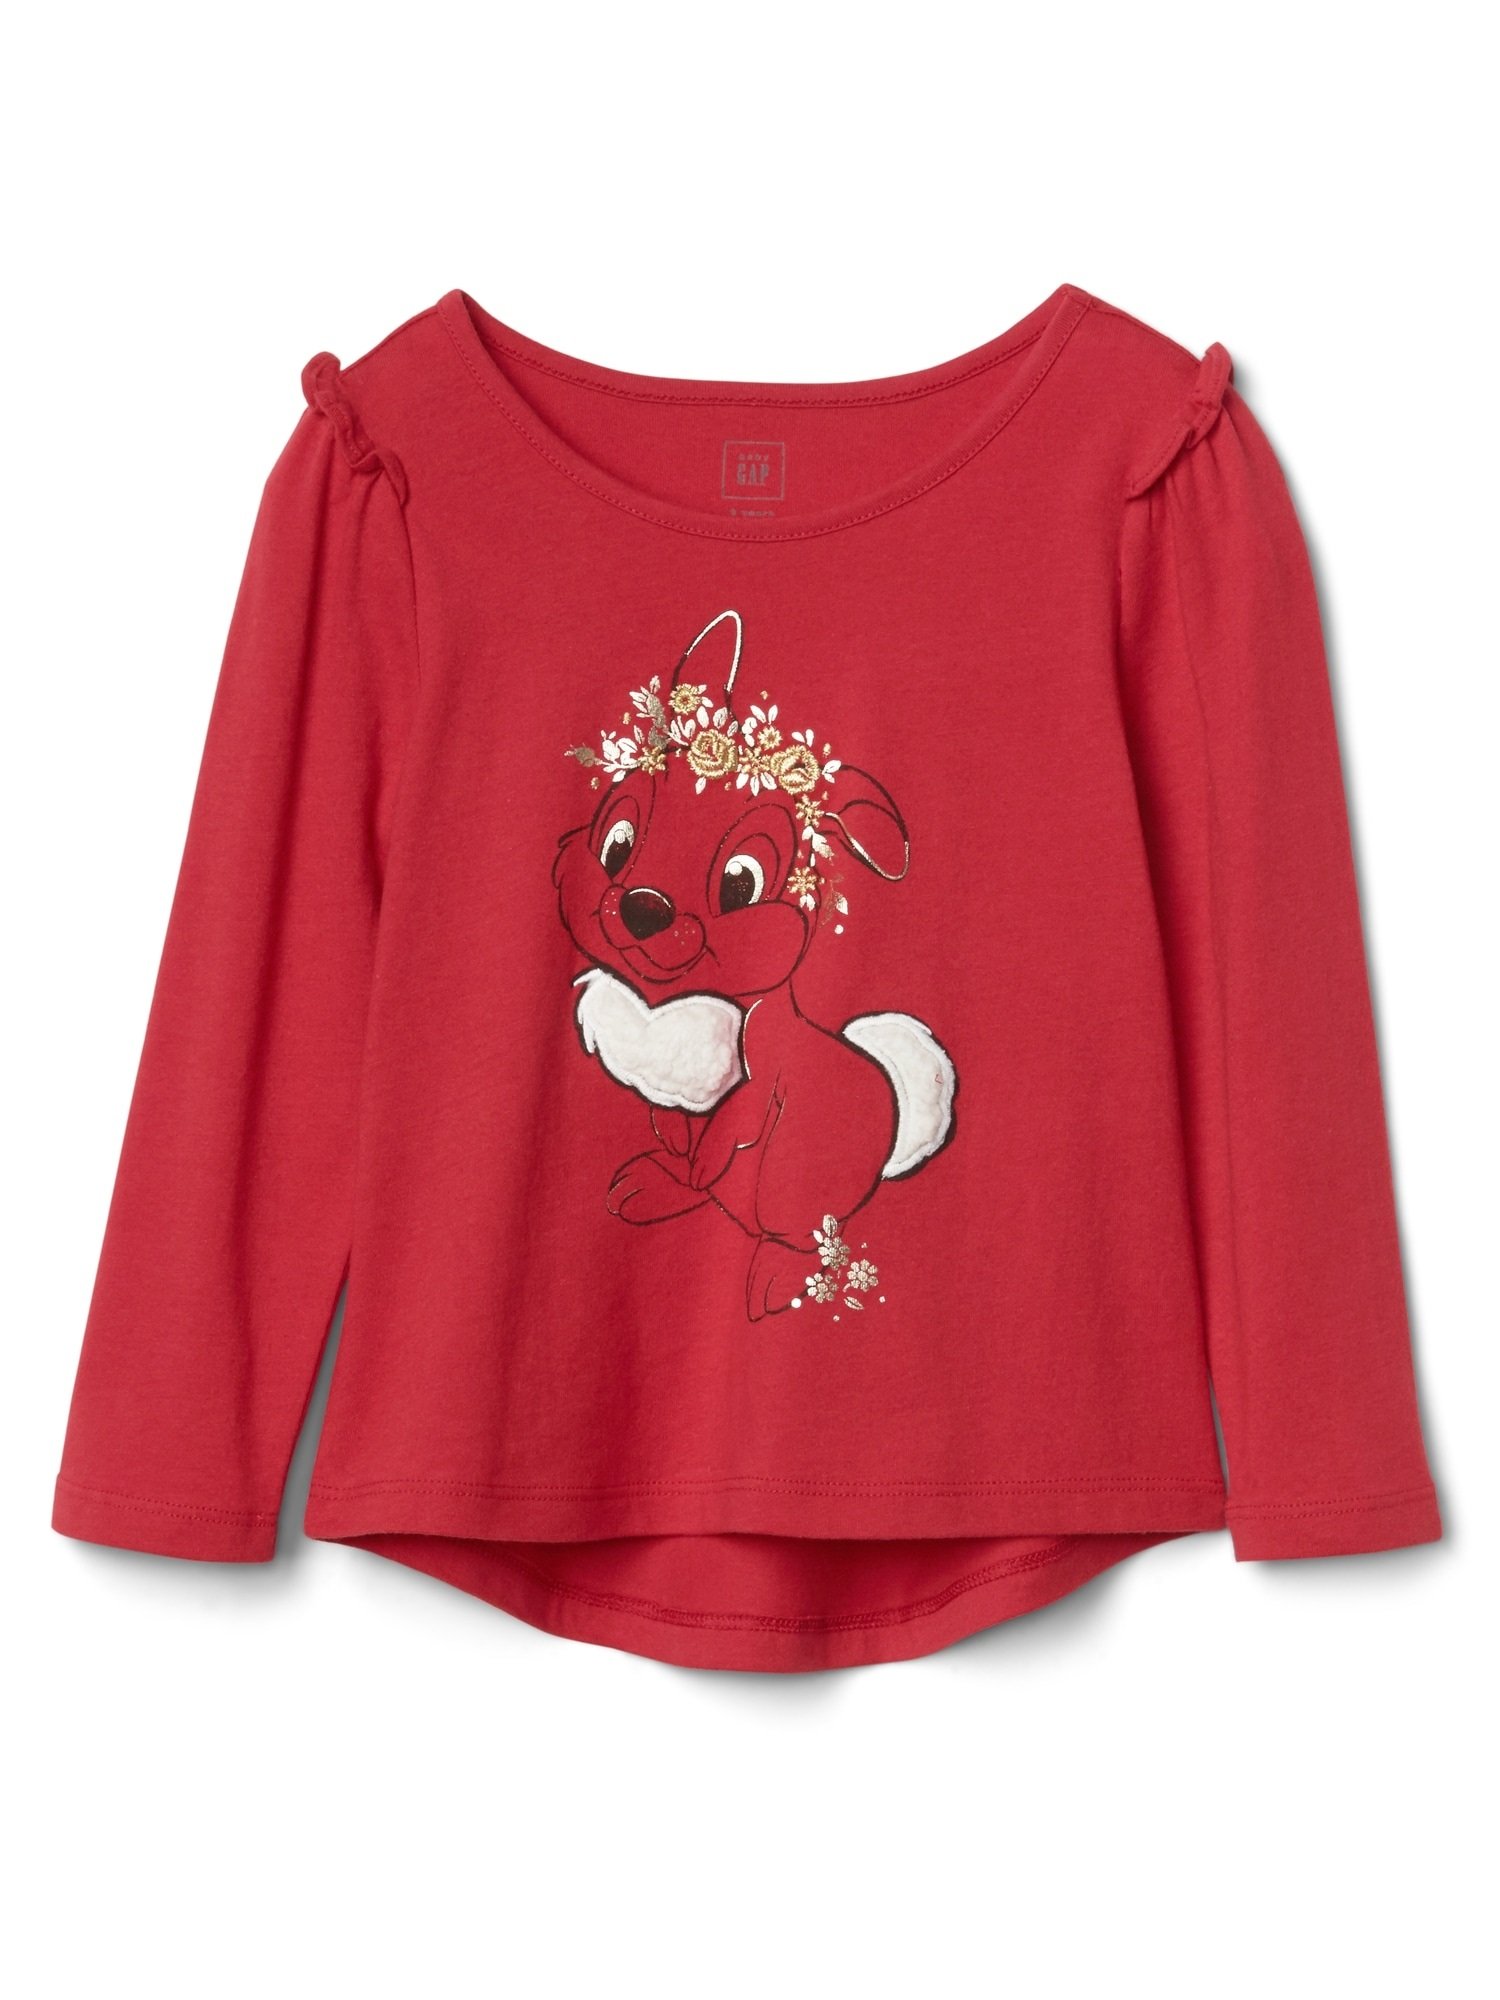 babyGap | Disney Baby t-shirt product image